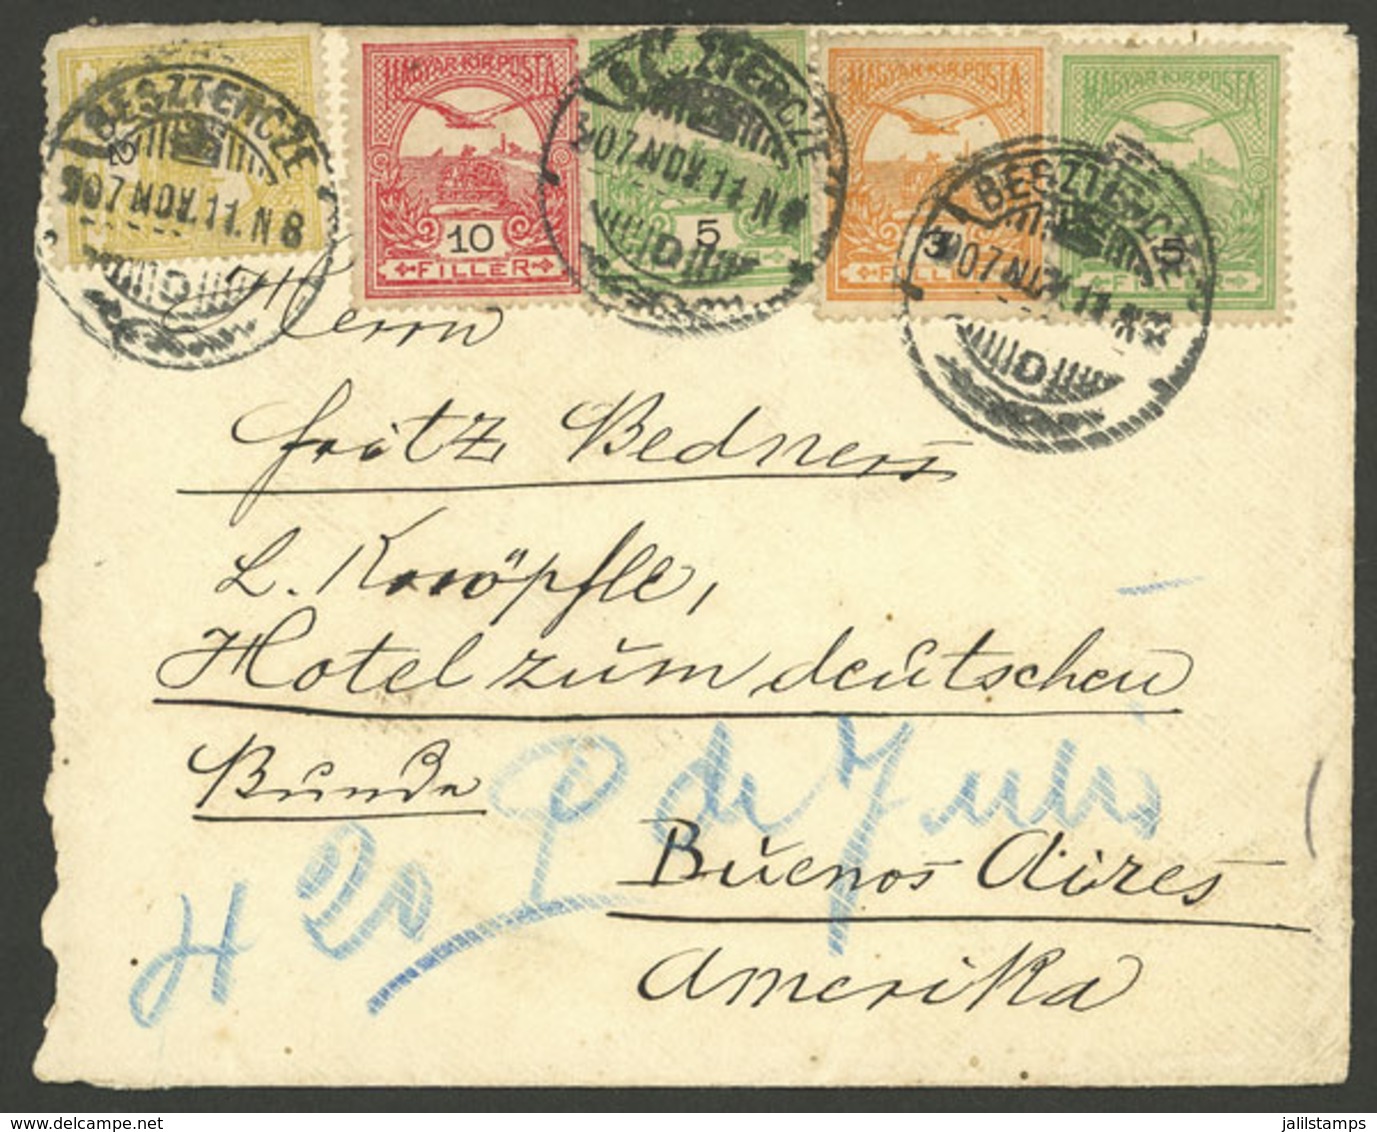 HUNGARY: 11/NO/1907 Besztercze - Argentina, Cover With Very Nice 4-color Franking, Transit Backstamp Of Paris And Buenos - Briefe U. Dokumente